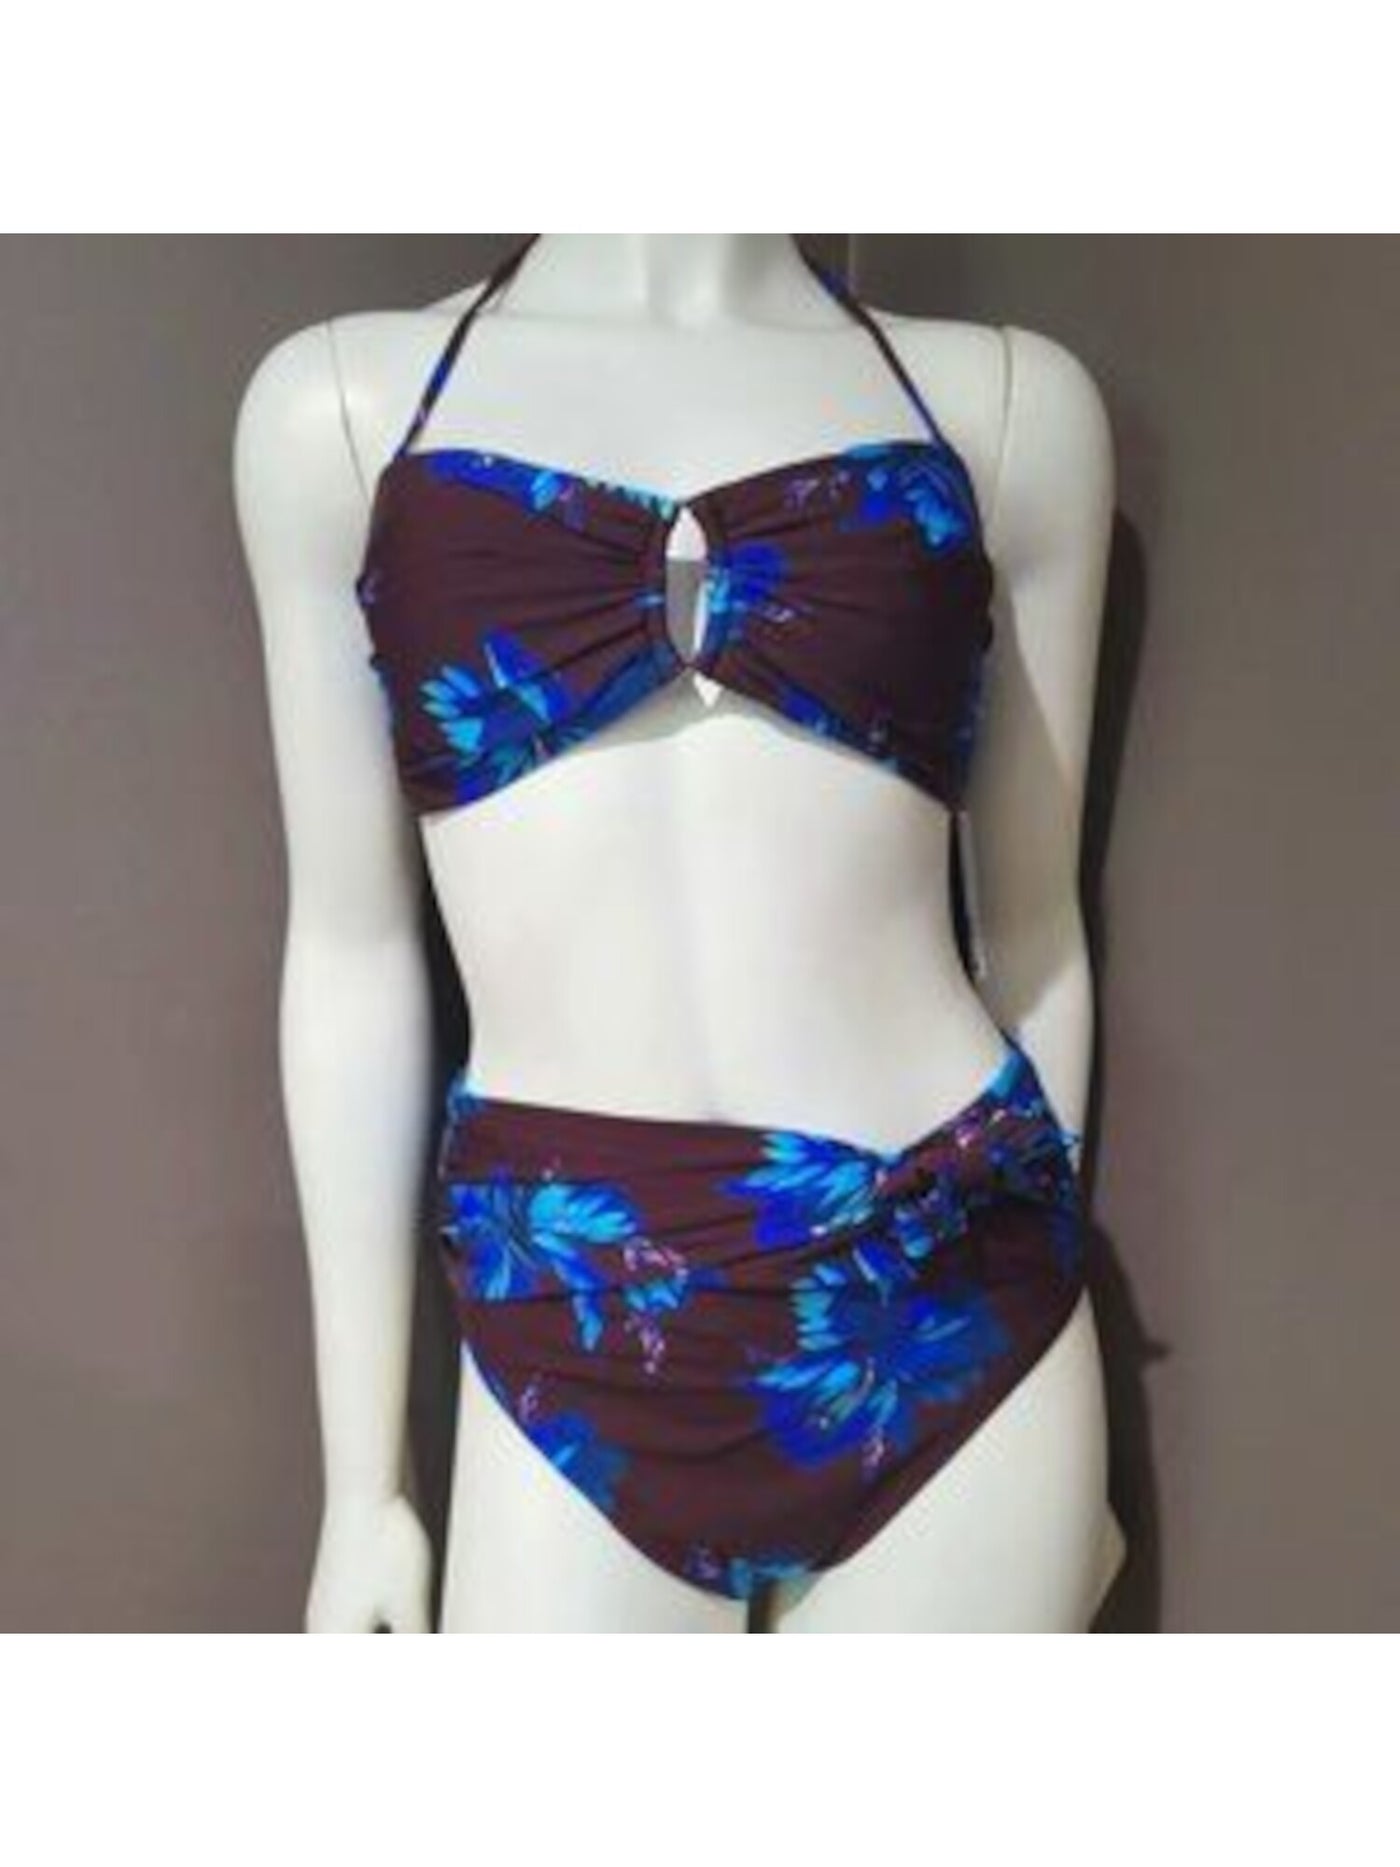 BCBG MAXAZRIA Women's Burgundy Floral Stretch Removable Soft Cups Cutout Convertible Bandeau Swimsuit Top 10